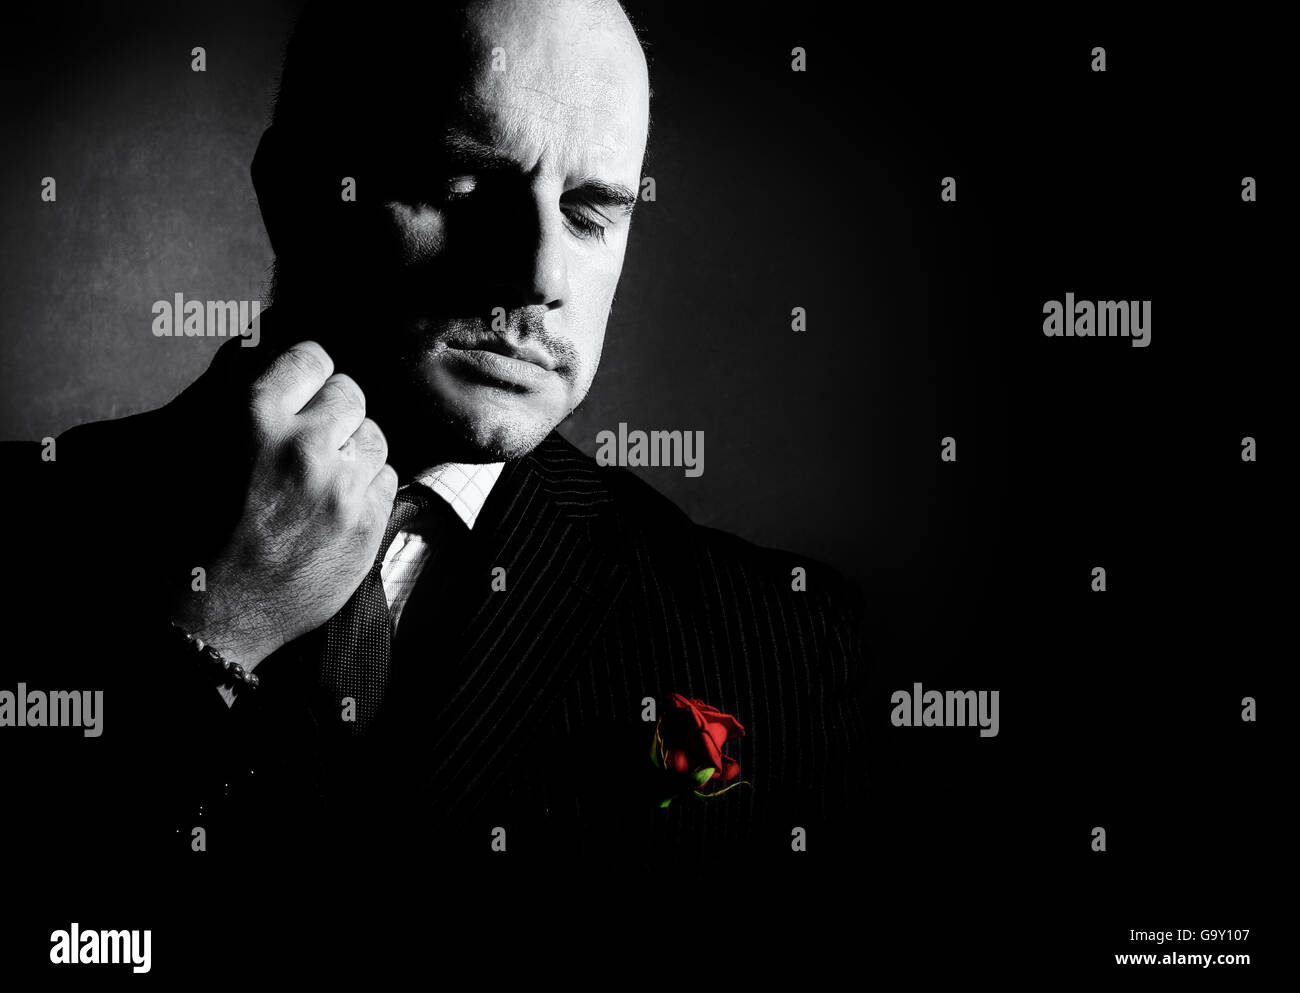 Portrait of man, godfather-like character. Black and white studio shot. Stock Photo